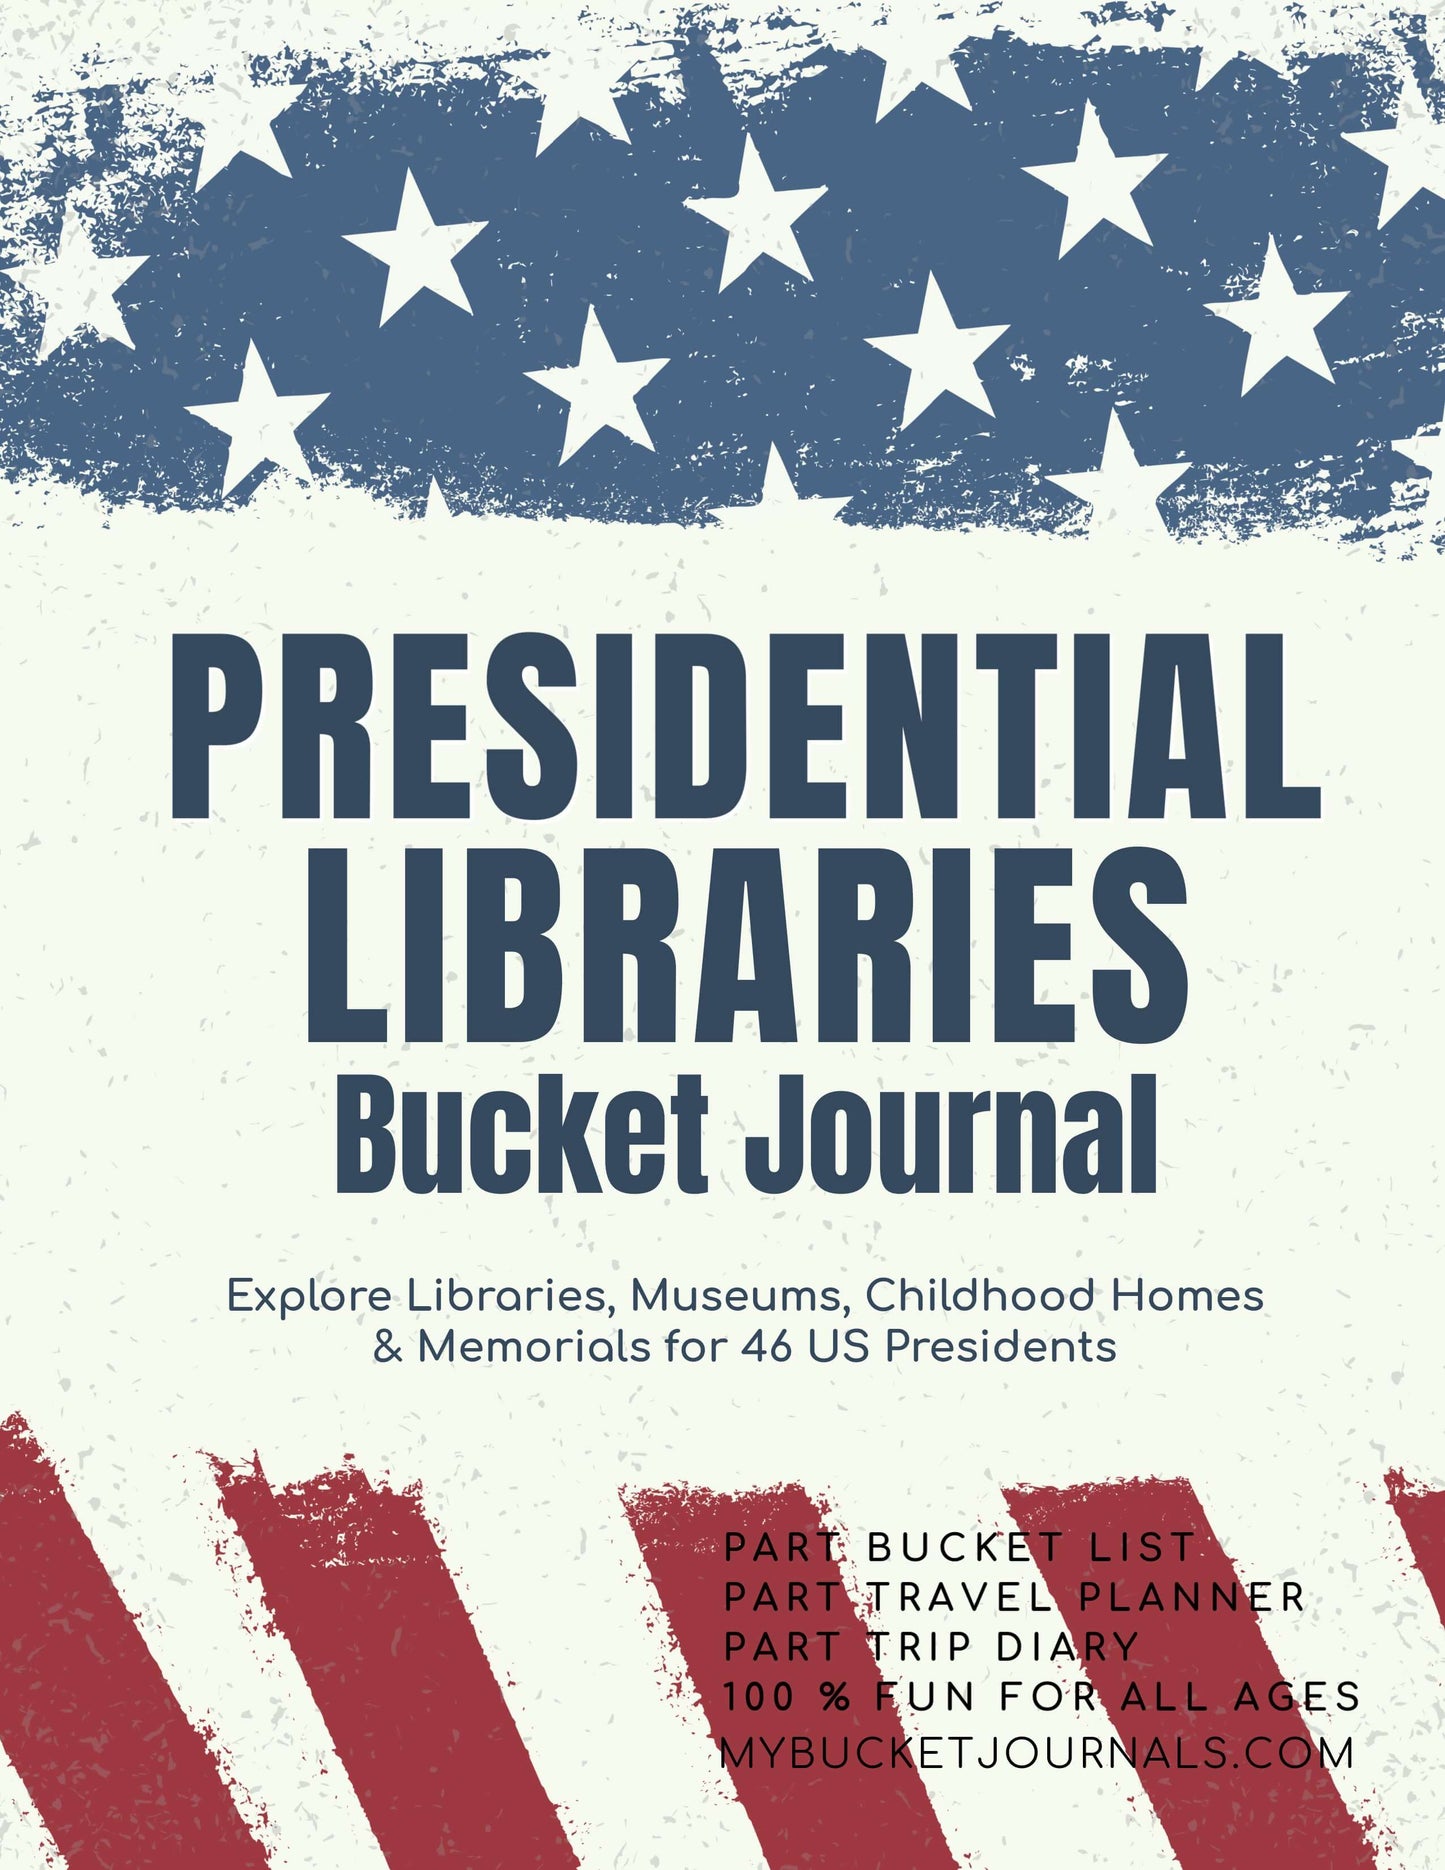 SD-Presidential Libraries Bucket Journal